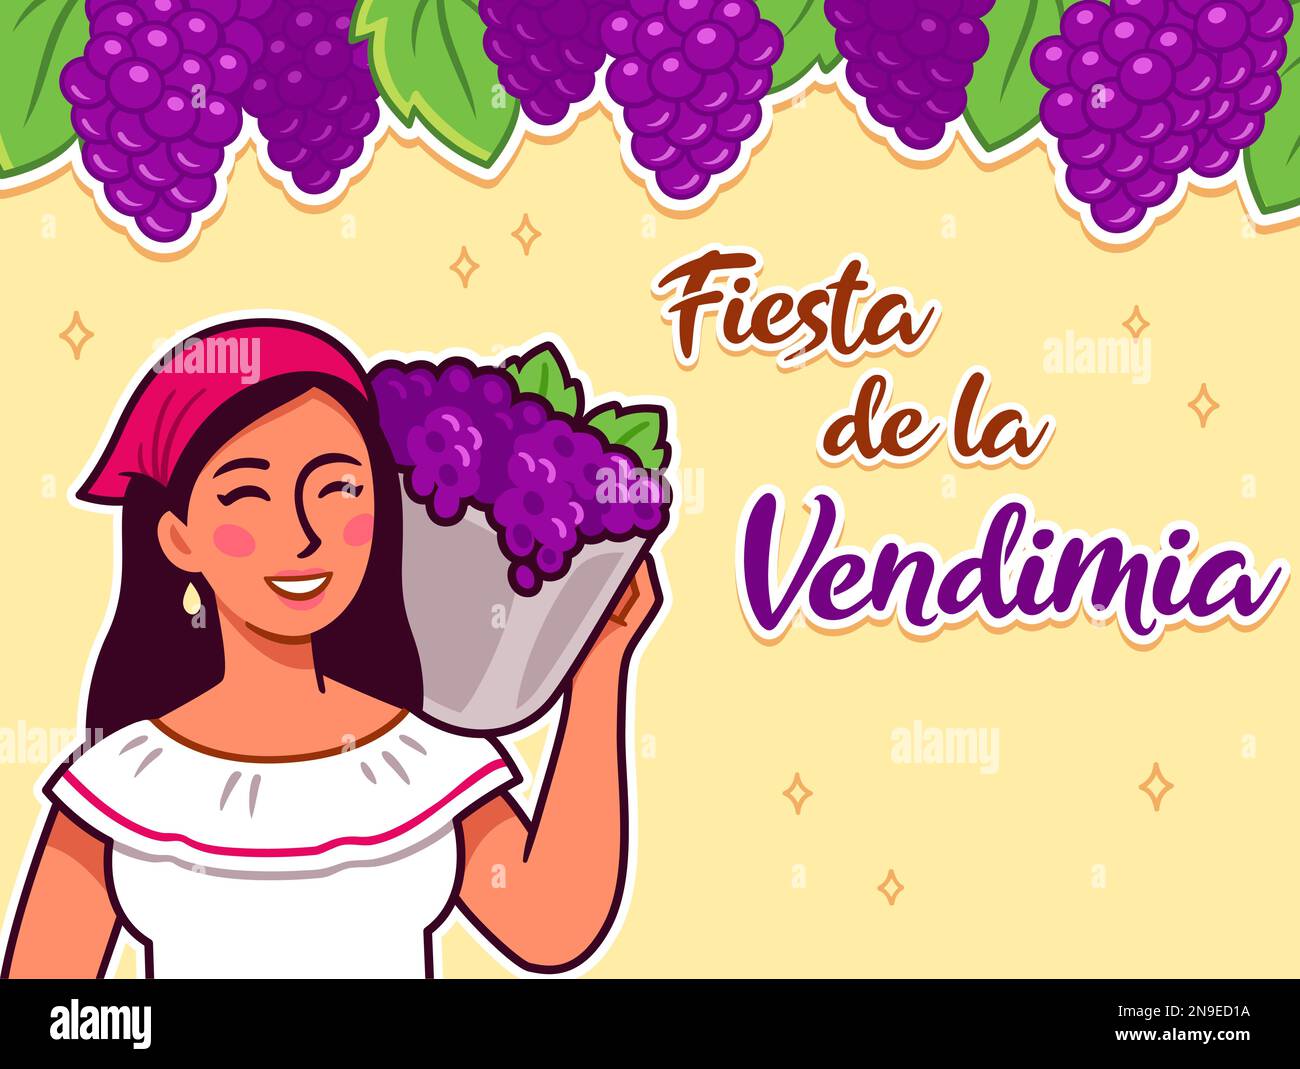 Fiesta de la Vendimia (Grape harvest festival in Spanish). Pretty hispanic woman holding basket of grapes. Stock Vector